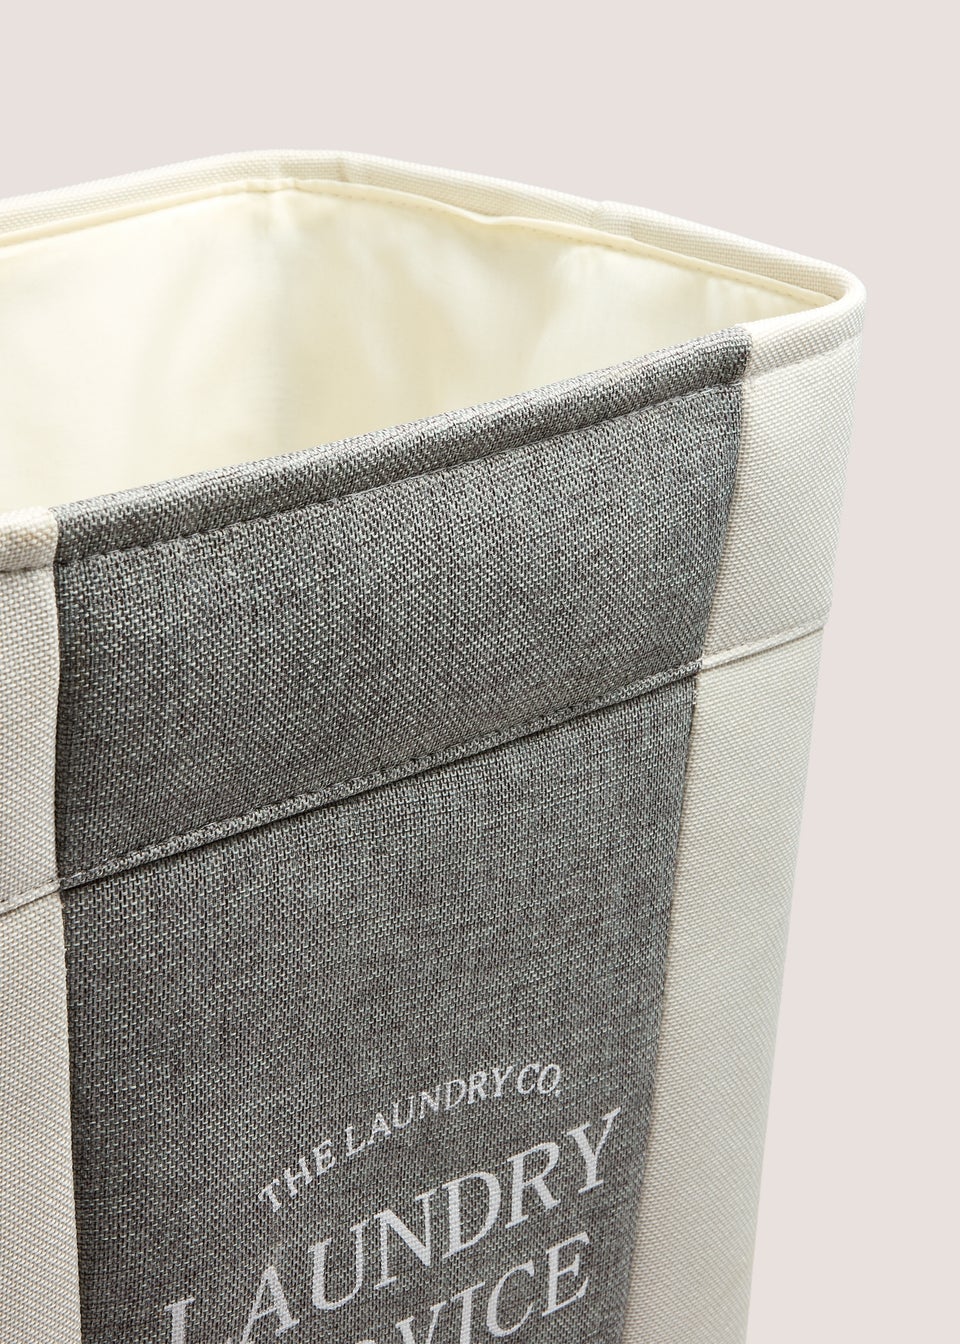 Laundry Co Grey Fabric Laundry Bag (55x40x30cm)